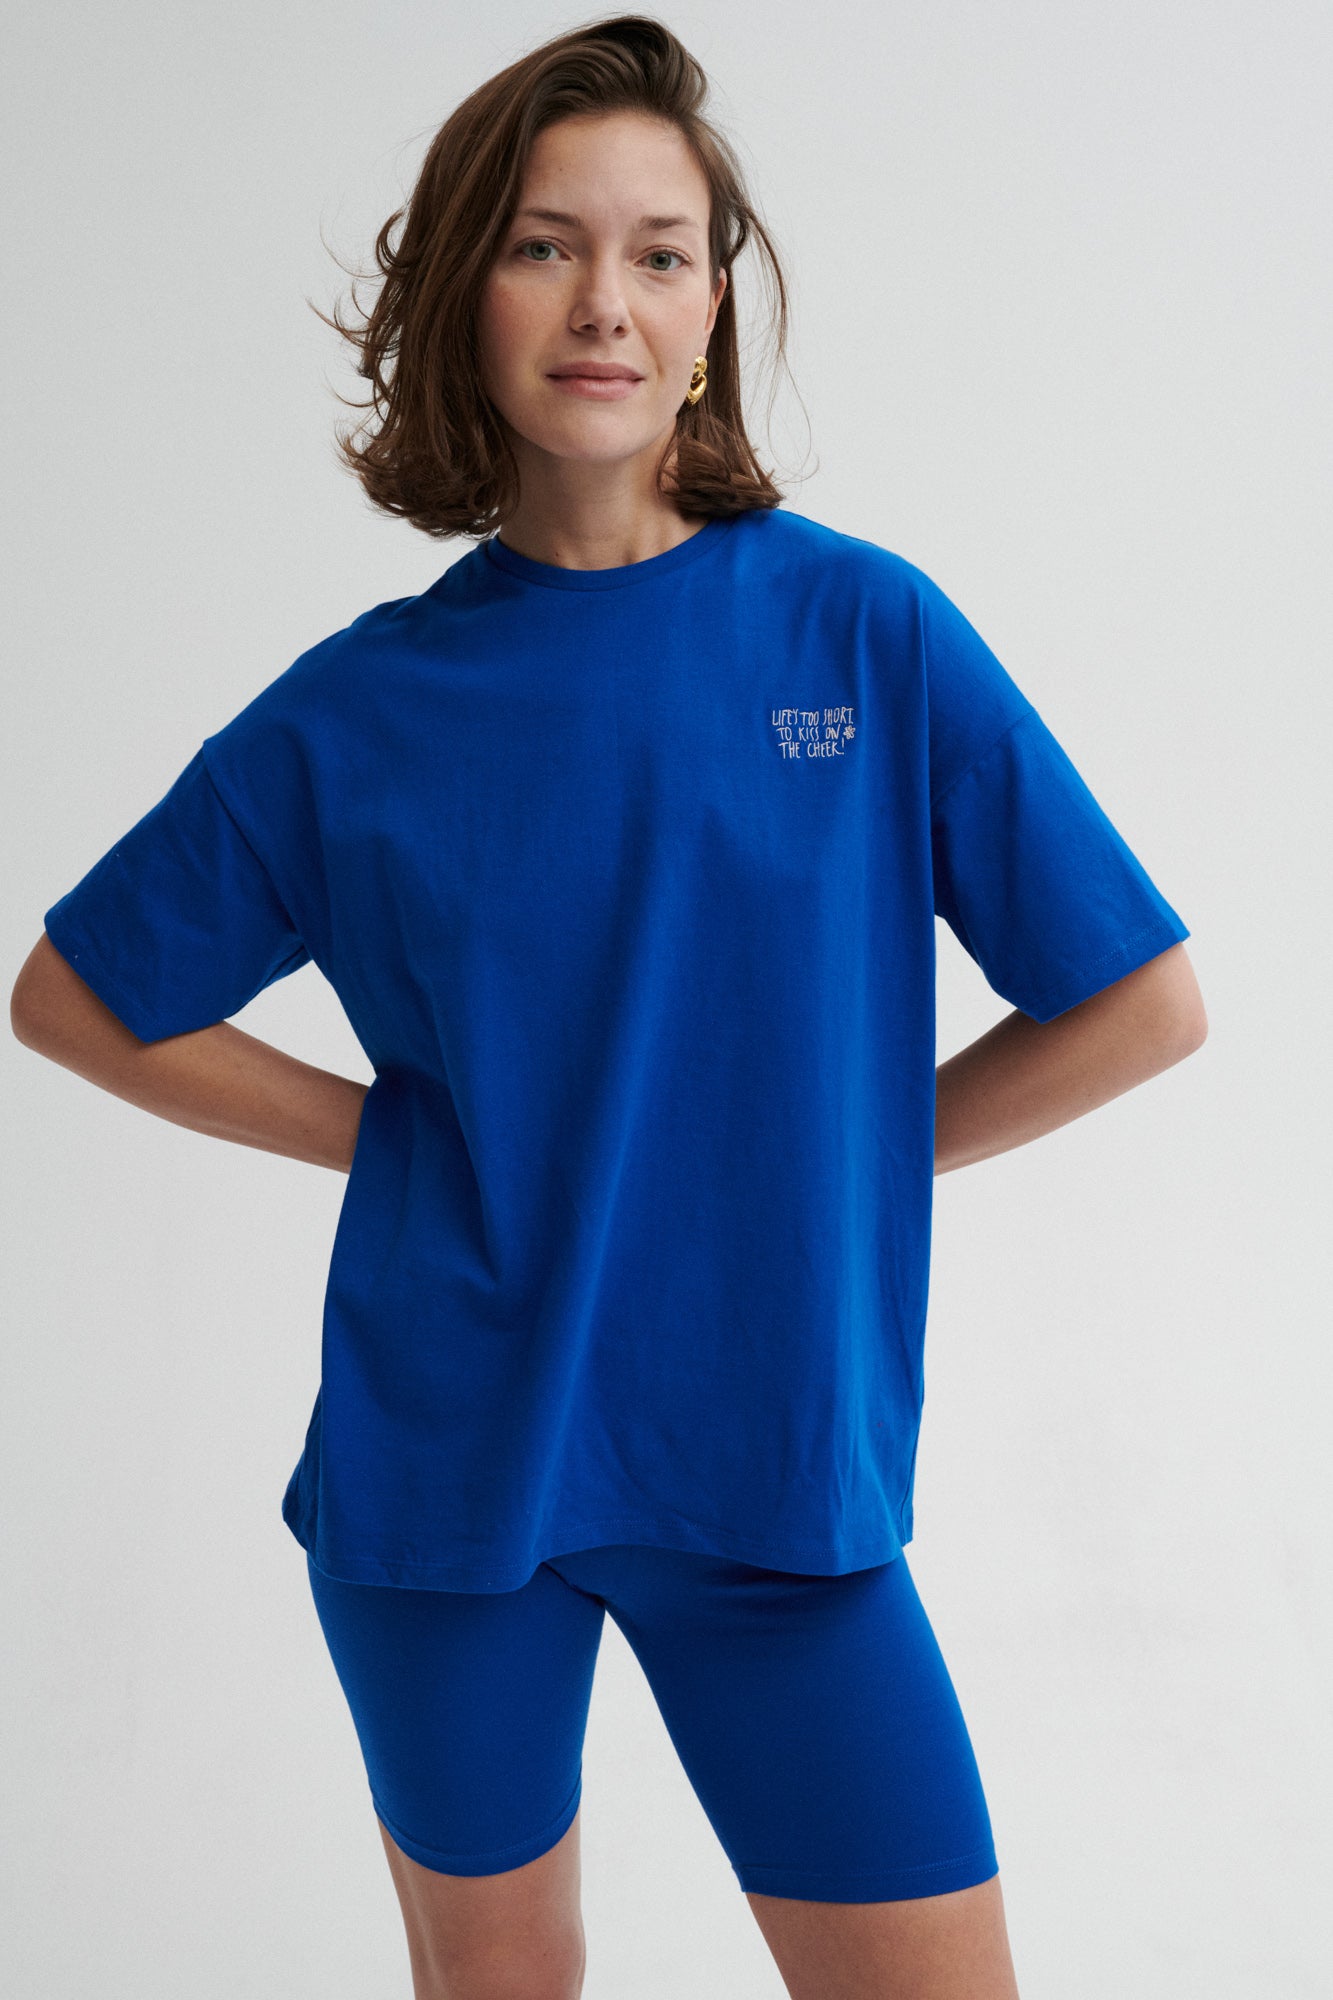 T-shirt in fine cotton / 13 / 27 / ultramarine